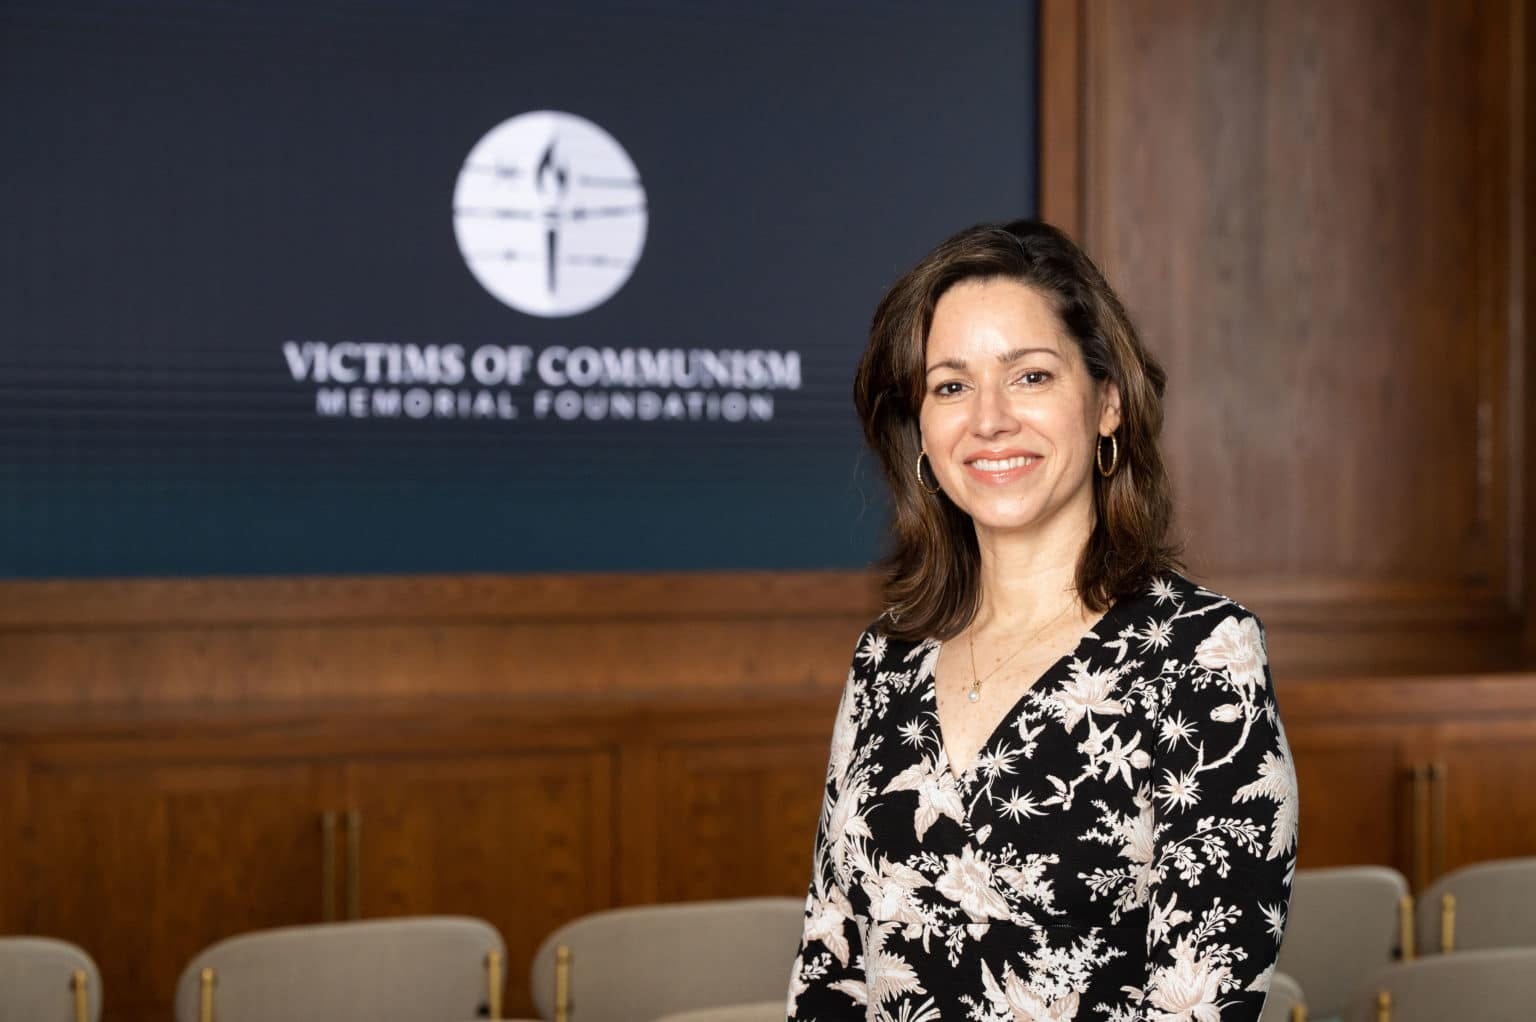 Victims of Communism with Elizabeth Spalding